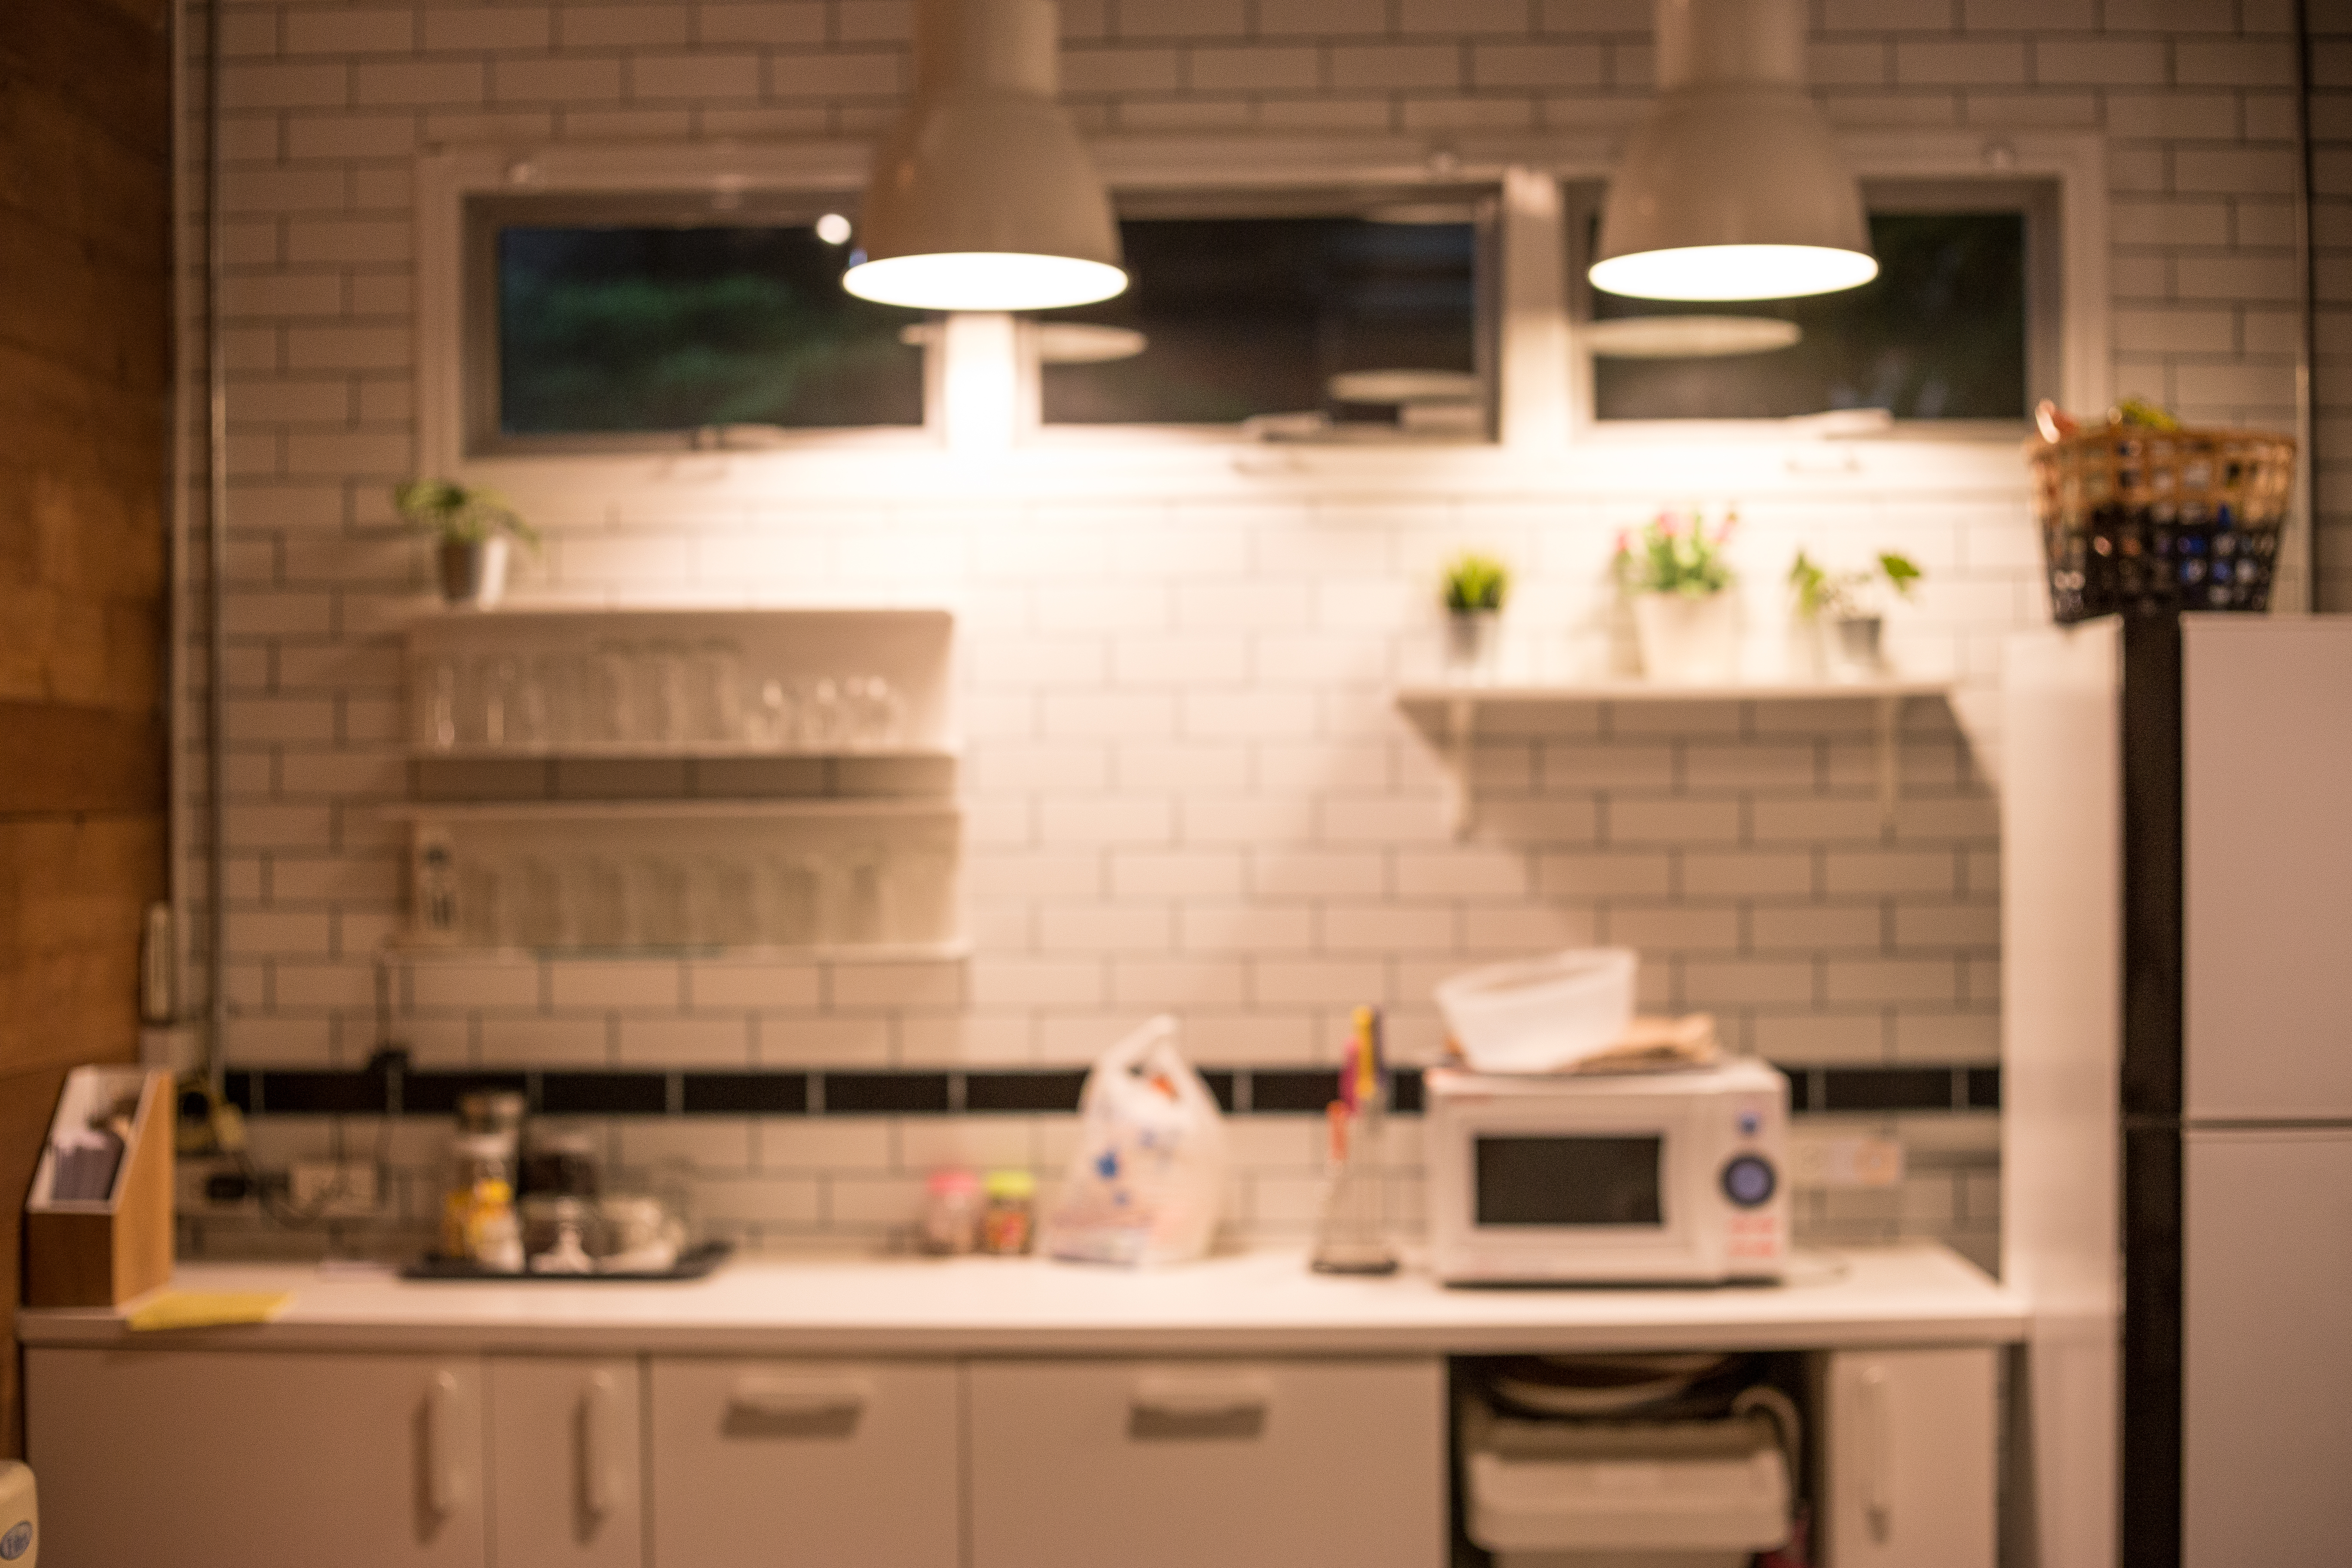 Textura de fondo de cocina con iluminación de lámpara. | Fuente: Shutterstock